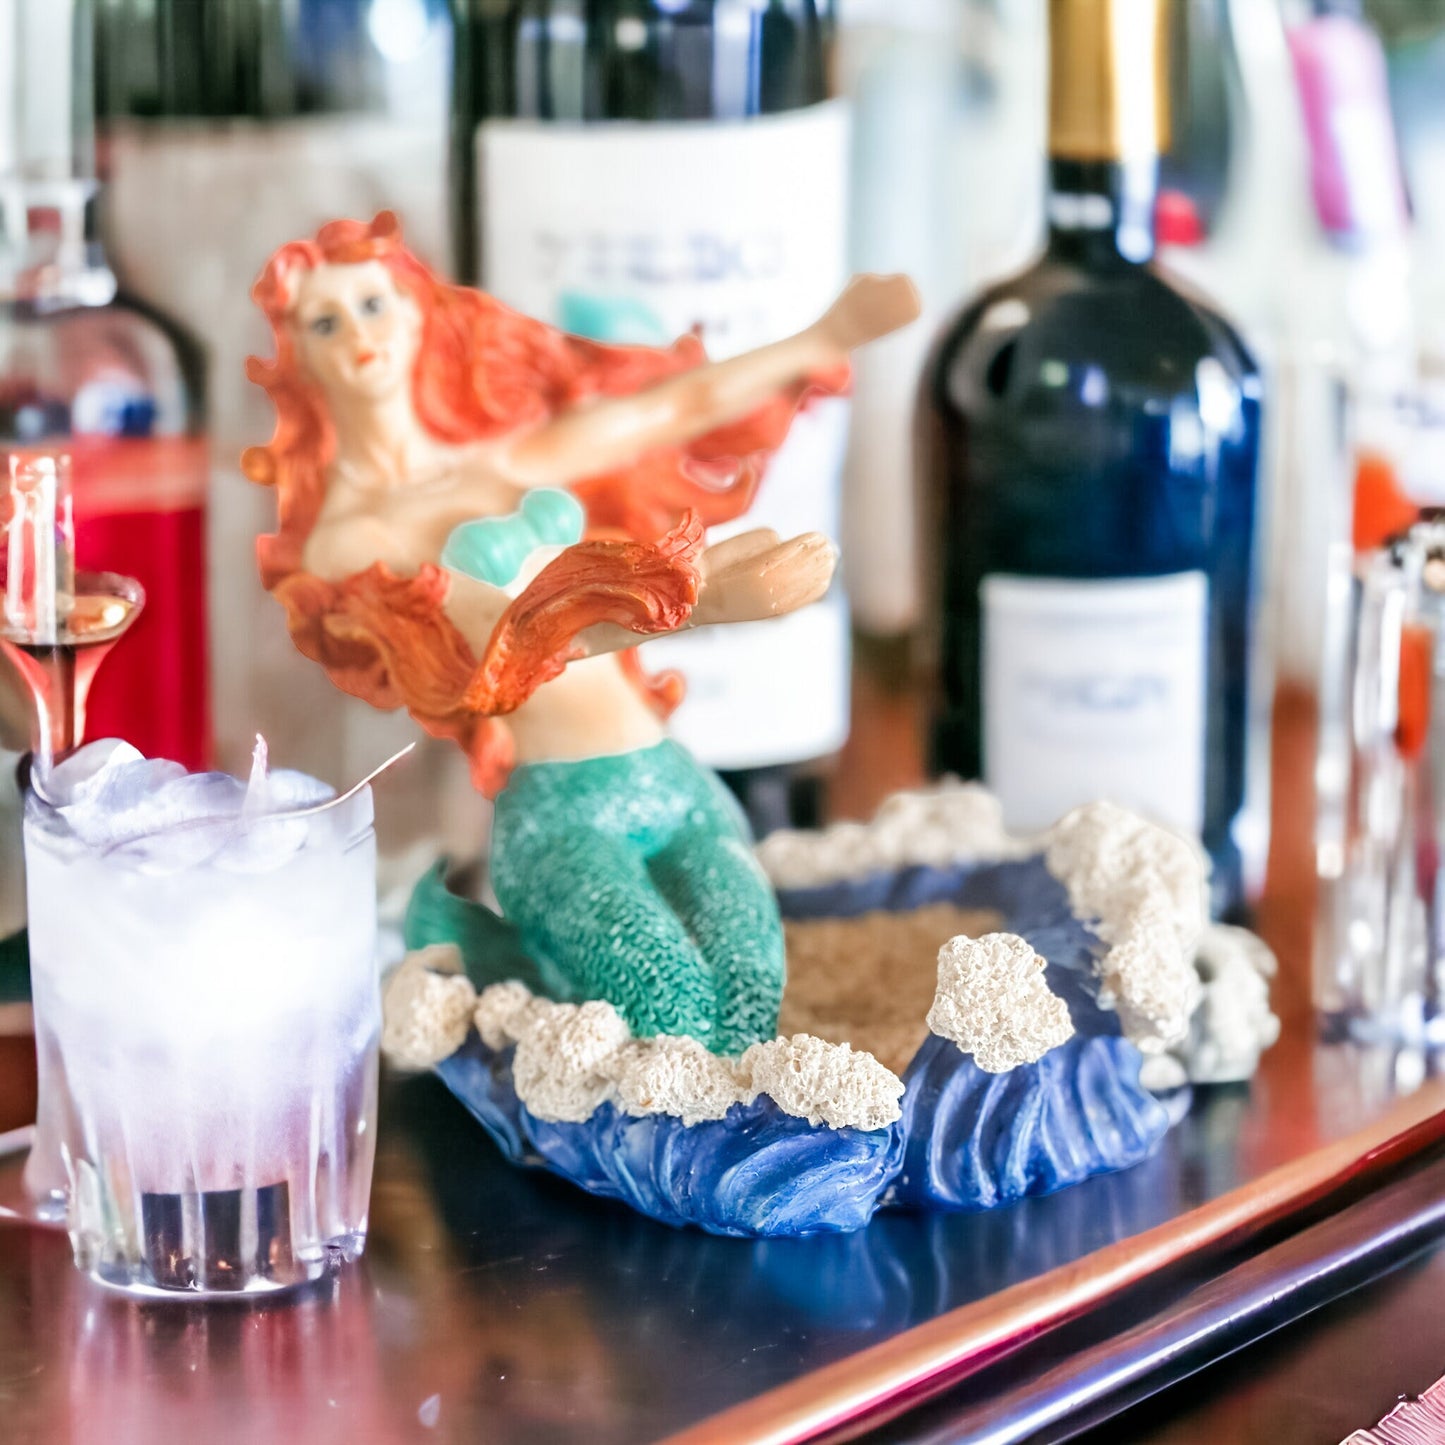 Mermaid Wine Bottle Holder, Bar Cart Decor, Nautical Decor, Housewarming Gift